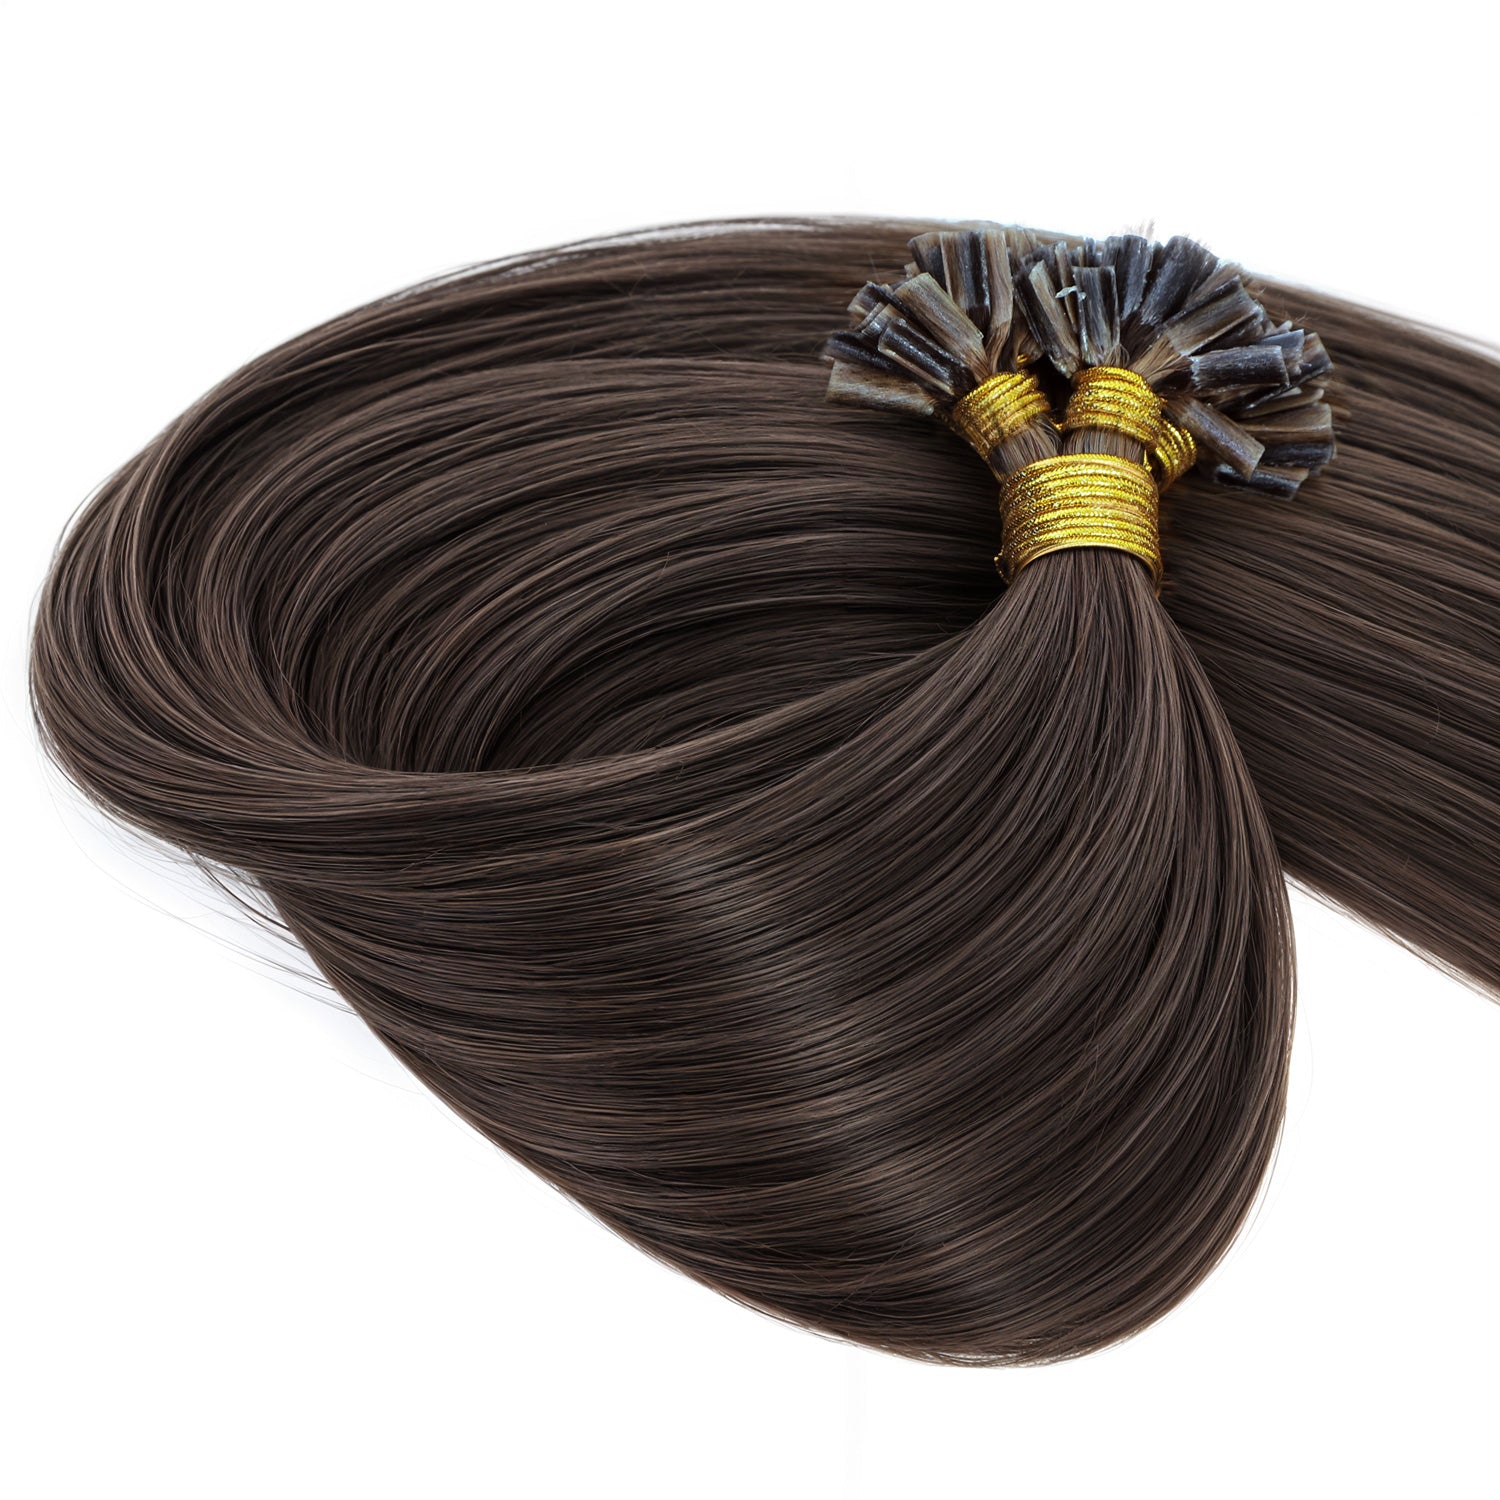 Keratin Bond Hair Extensions #2c/8a Chocolate Brown Ash Brown Mix